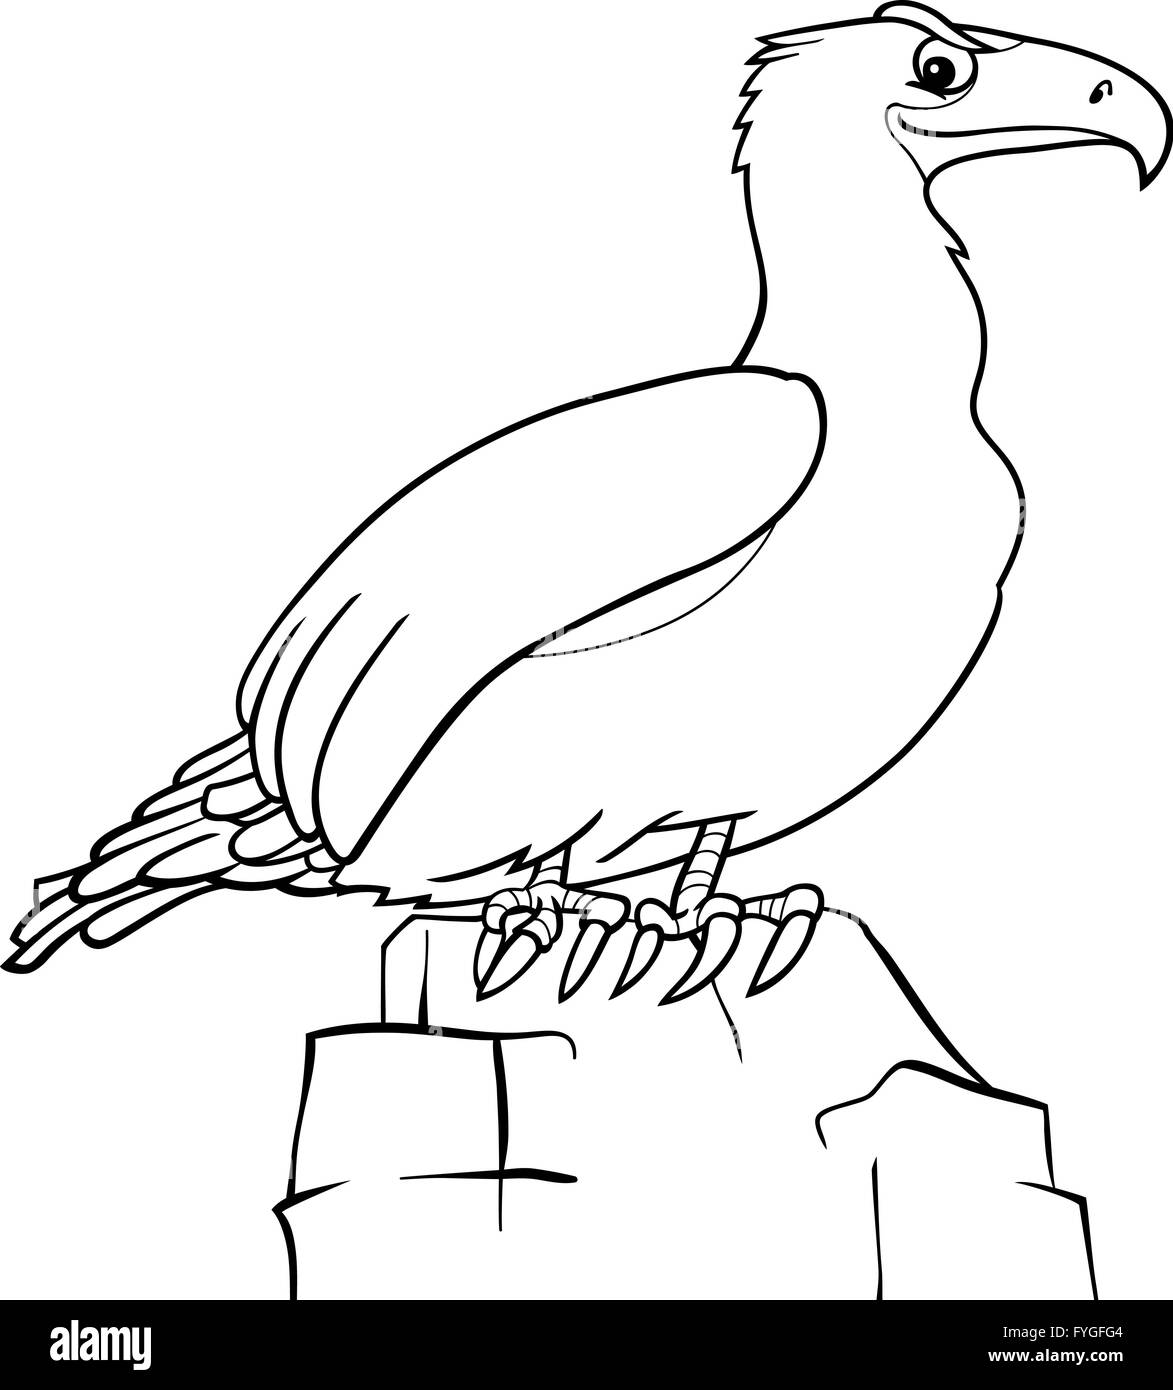 cartoon eagle for coloring book Stock Photo